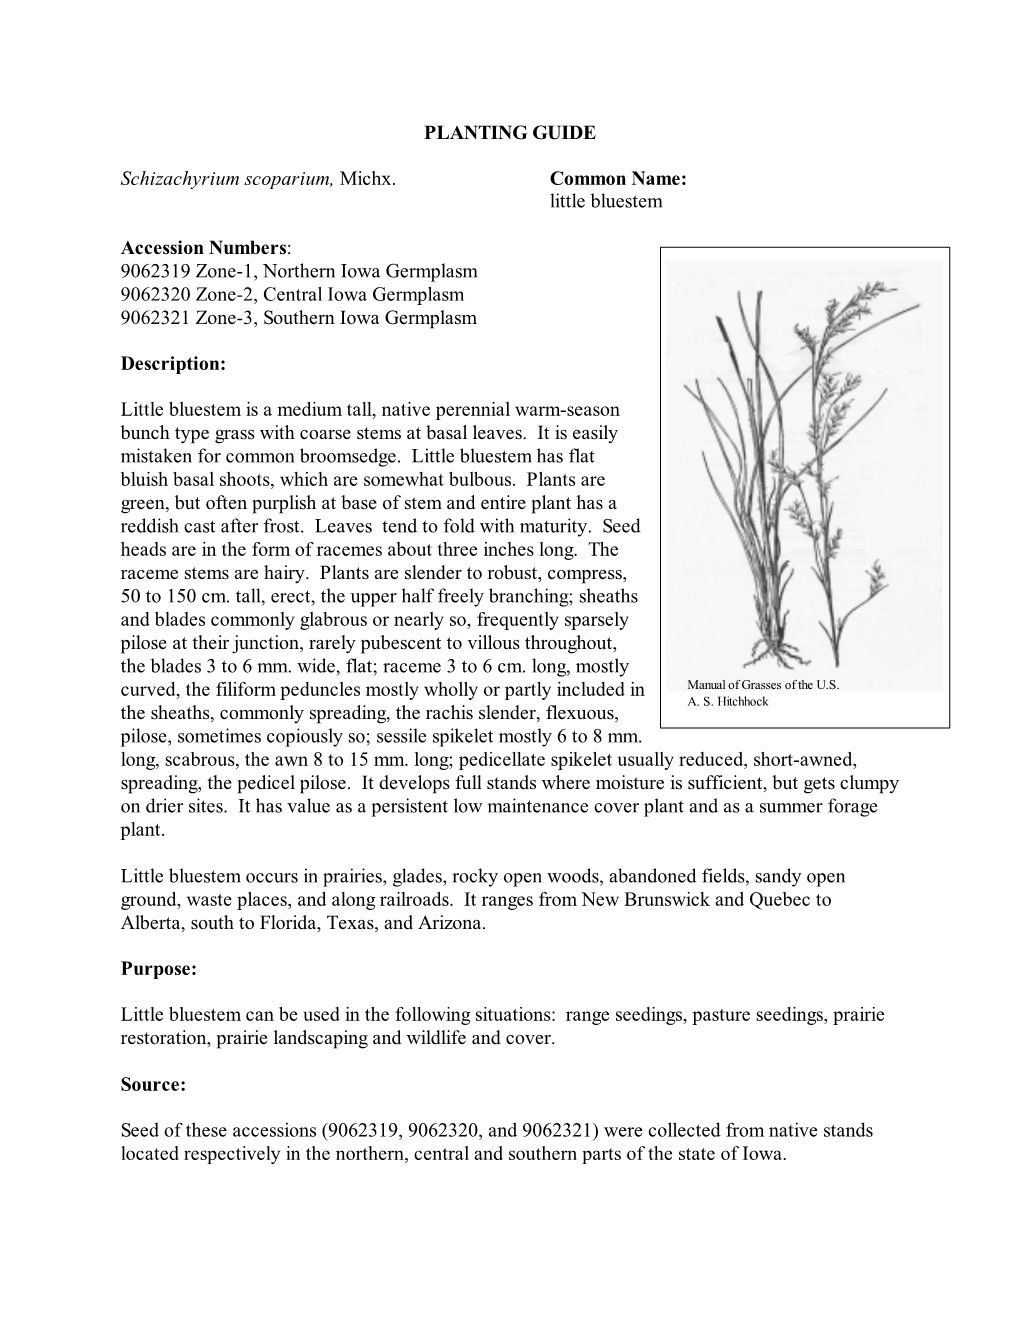 PLANTING GUIDE Schizachyrium Scoparium, Michx. Common Name: Little Bluestem Accession Numbers: 9062319 Zone-1, Northern Iowa